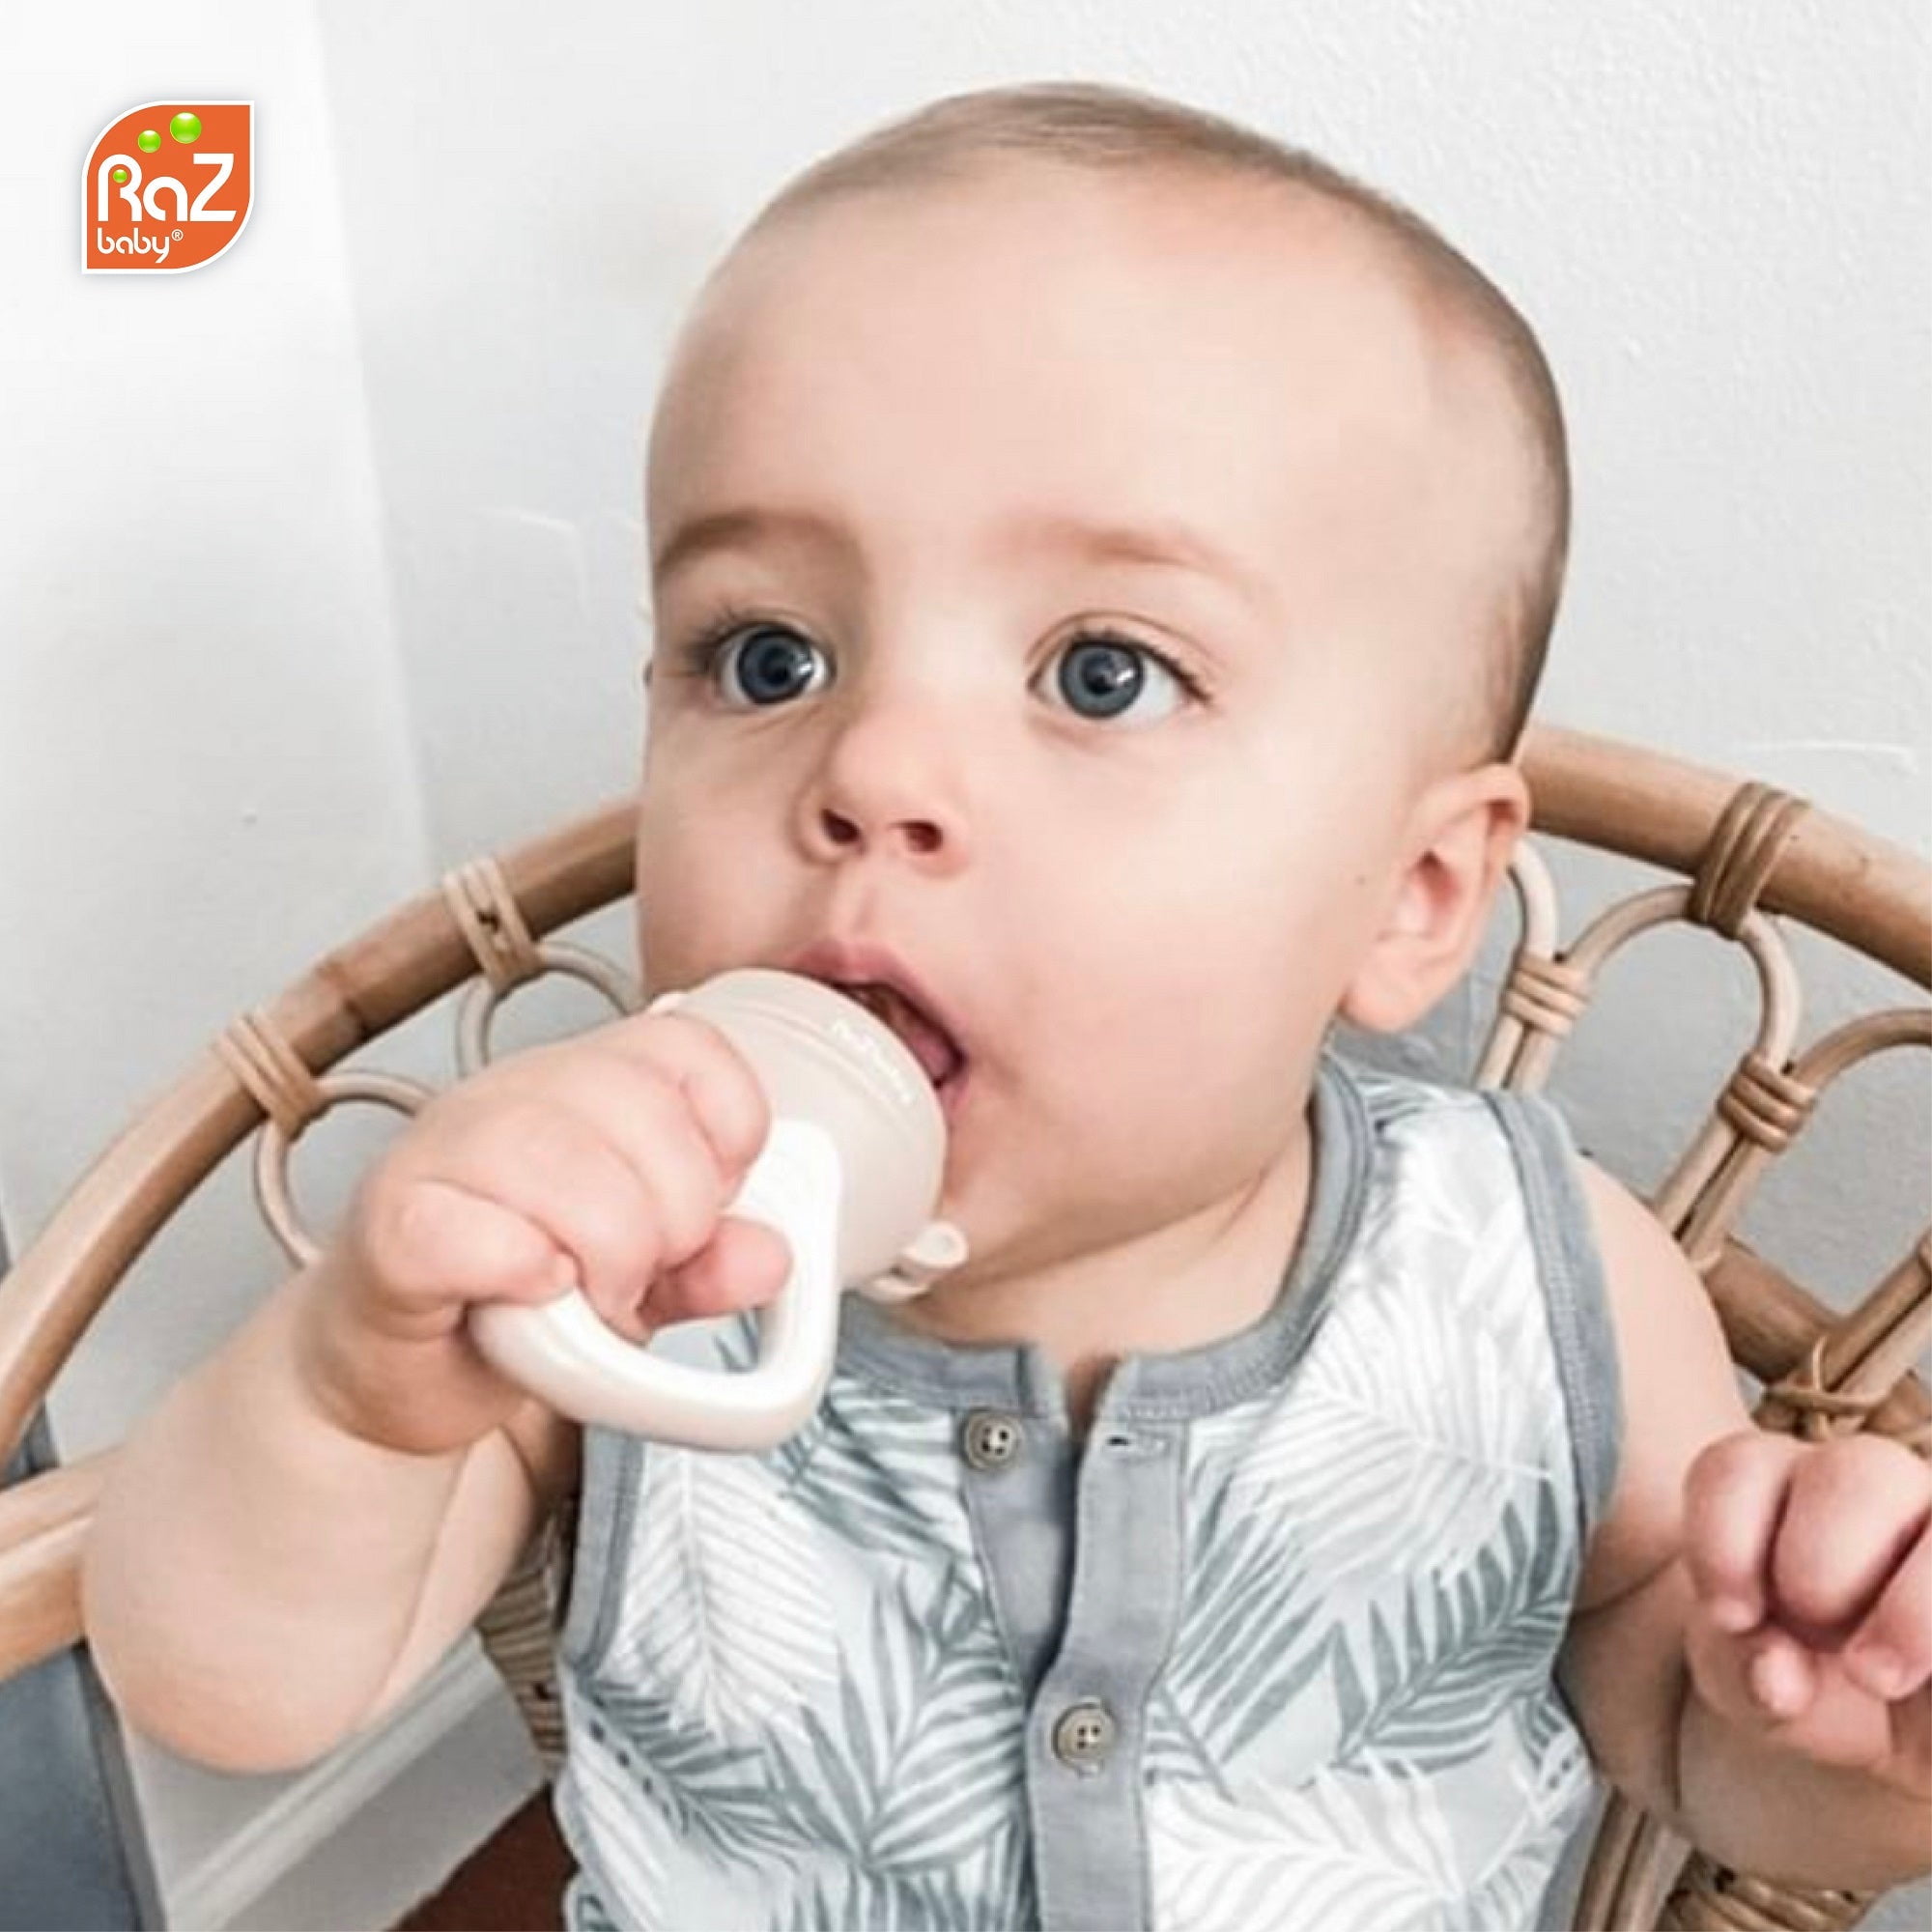 RaZbaby Baby Fruit Feeder/Food Feeder Pacifier | Infant Teething Toy  Teether 6M+, Add Baby's Favorite Frozen Fruit or Fresh Food for Teething  Relief